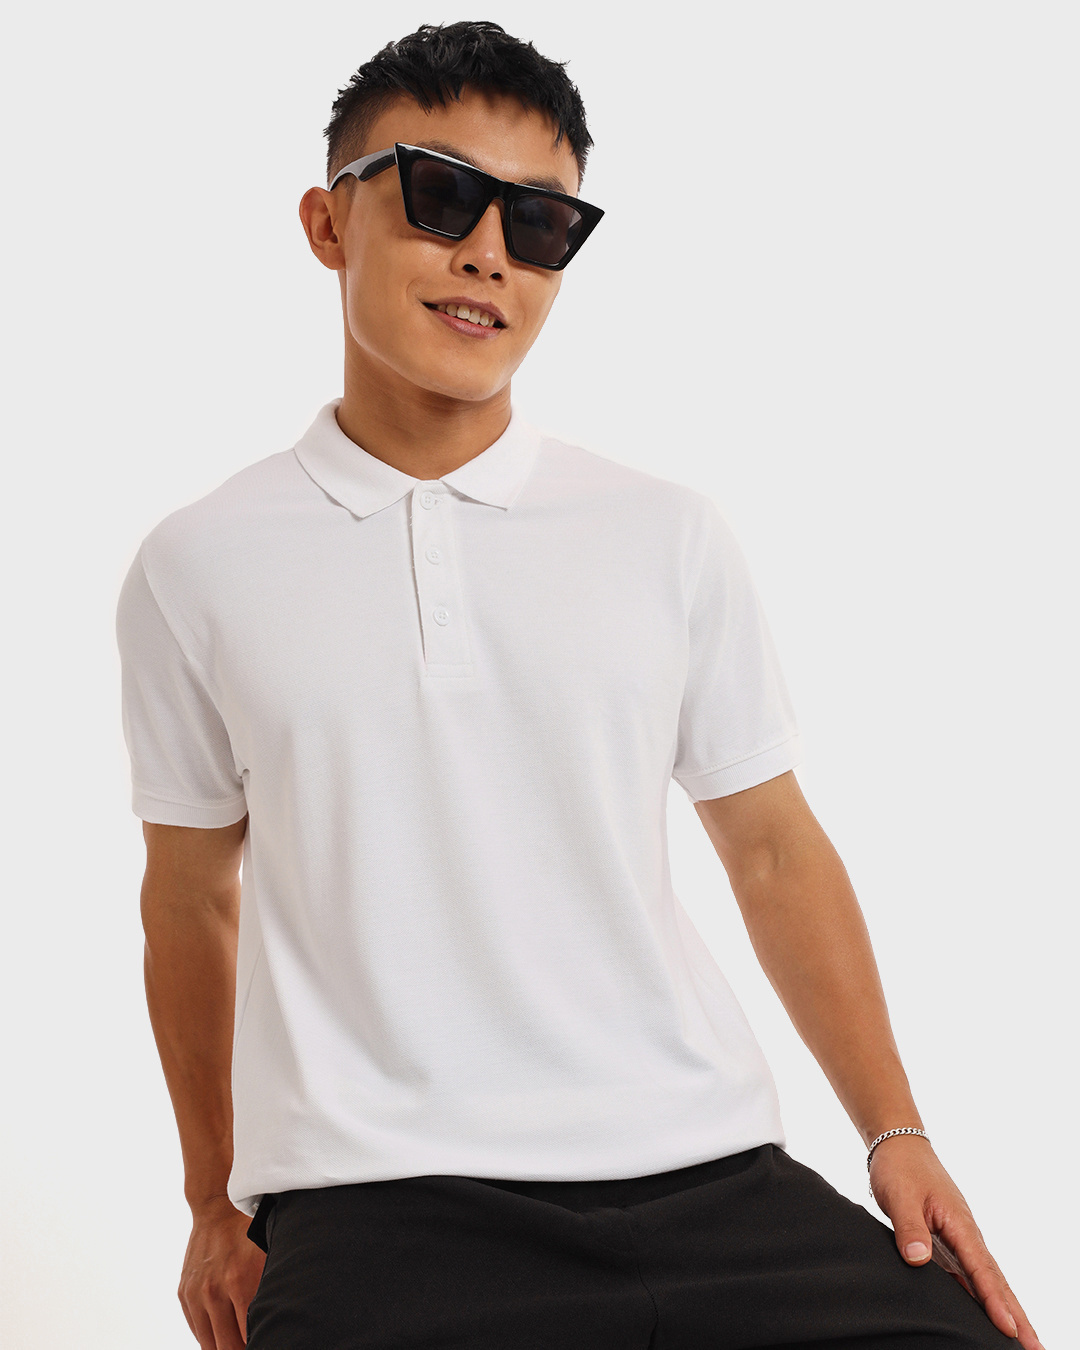 Buy Men's White Polo T-shirt Online at Bewakoof